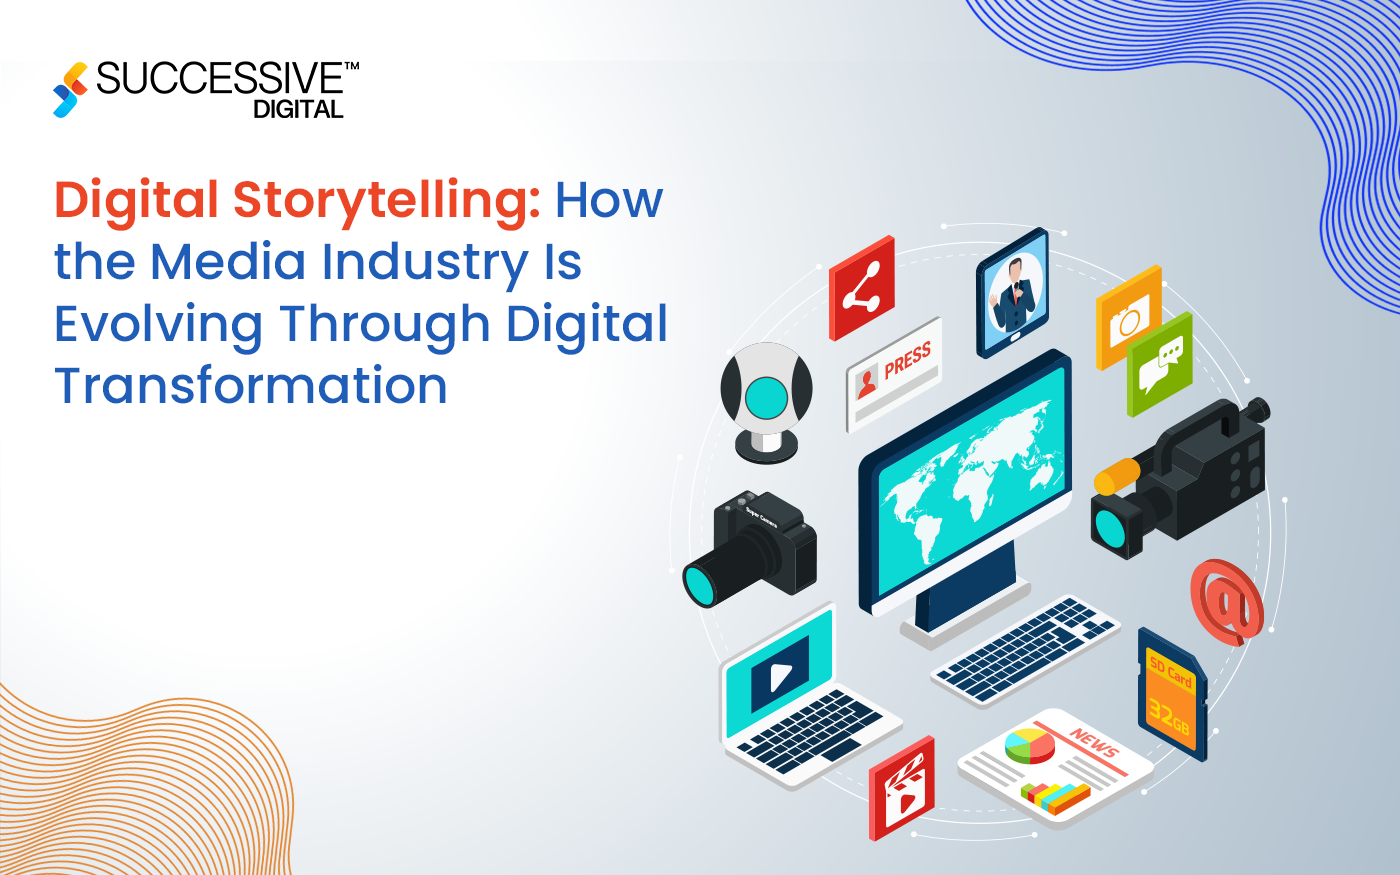 Digital Storytelling: How the Media Industry Is Evolving Through Digital Transformation